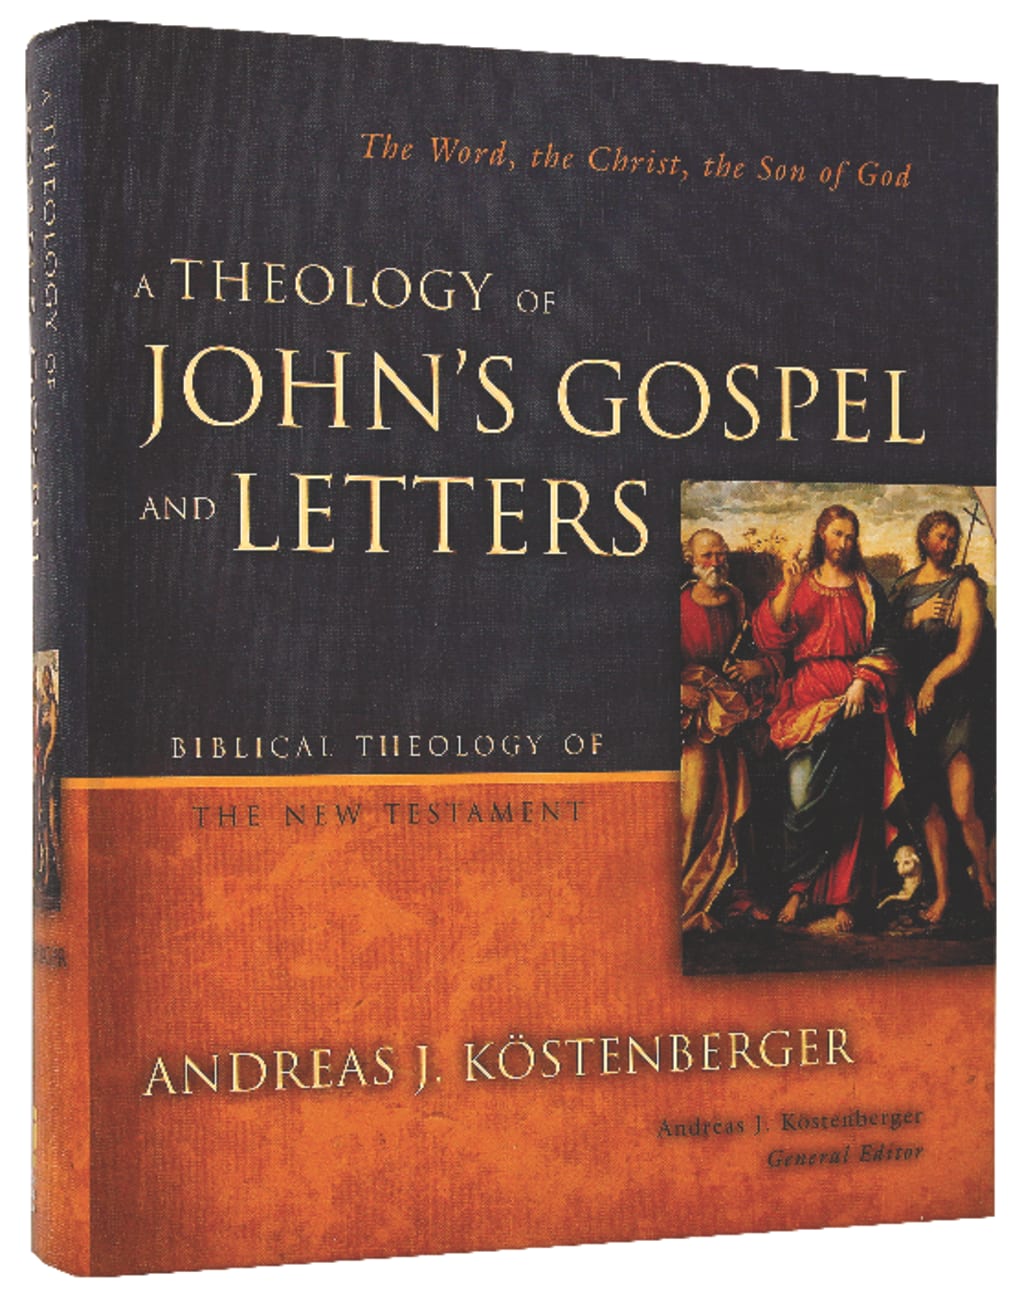 Theology of John's Gospel Letters (Biblical Theology Of The New Testament Series) Hardback